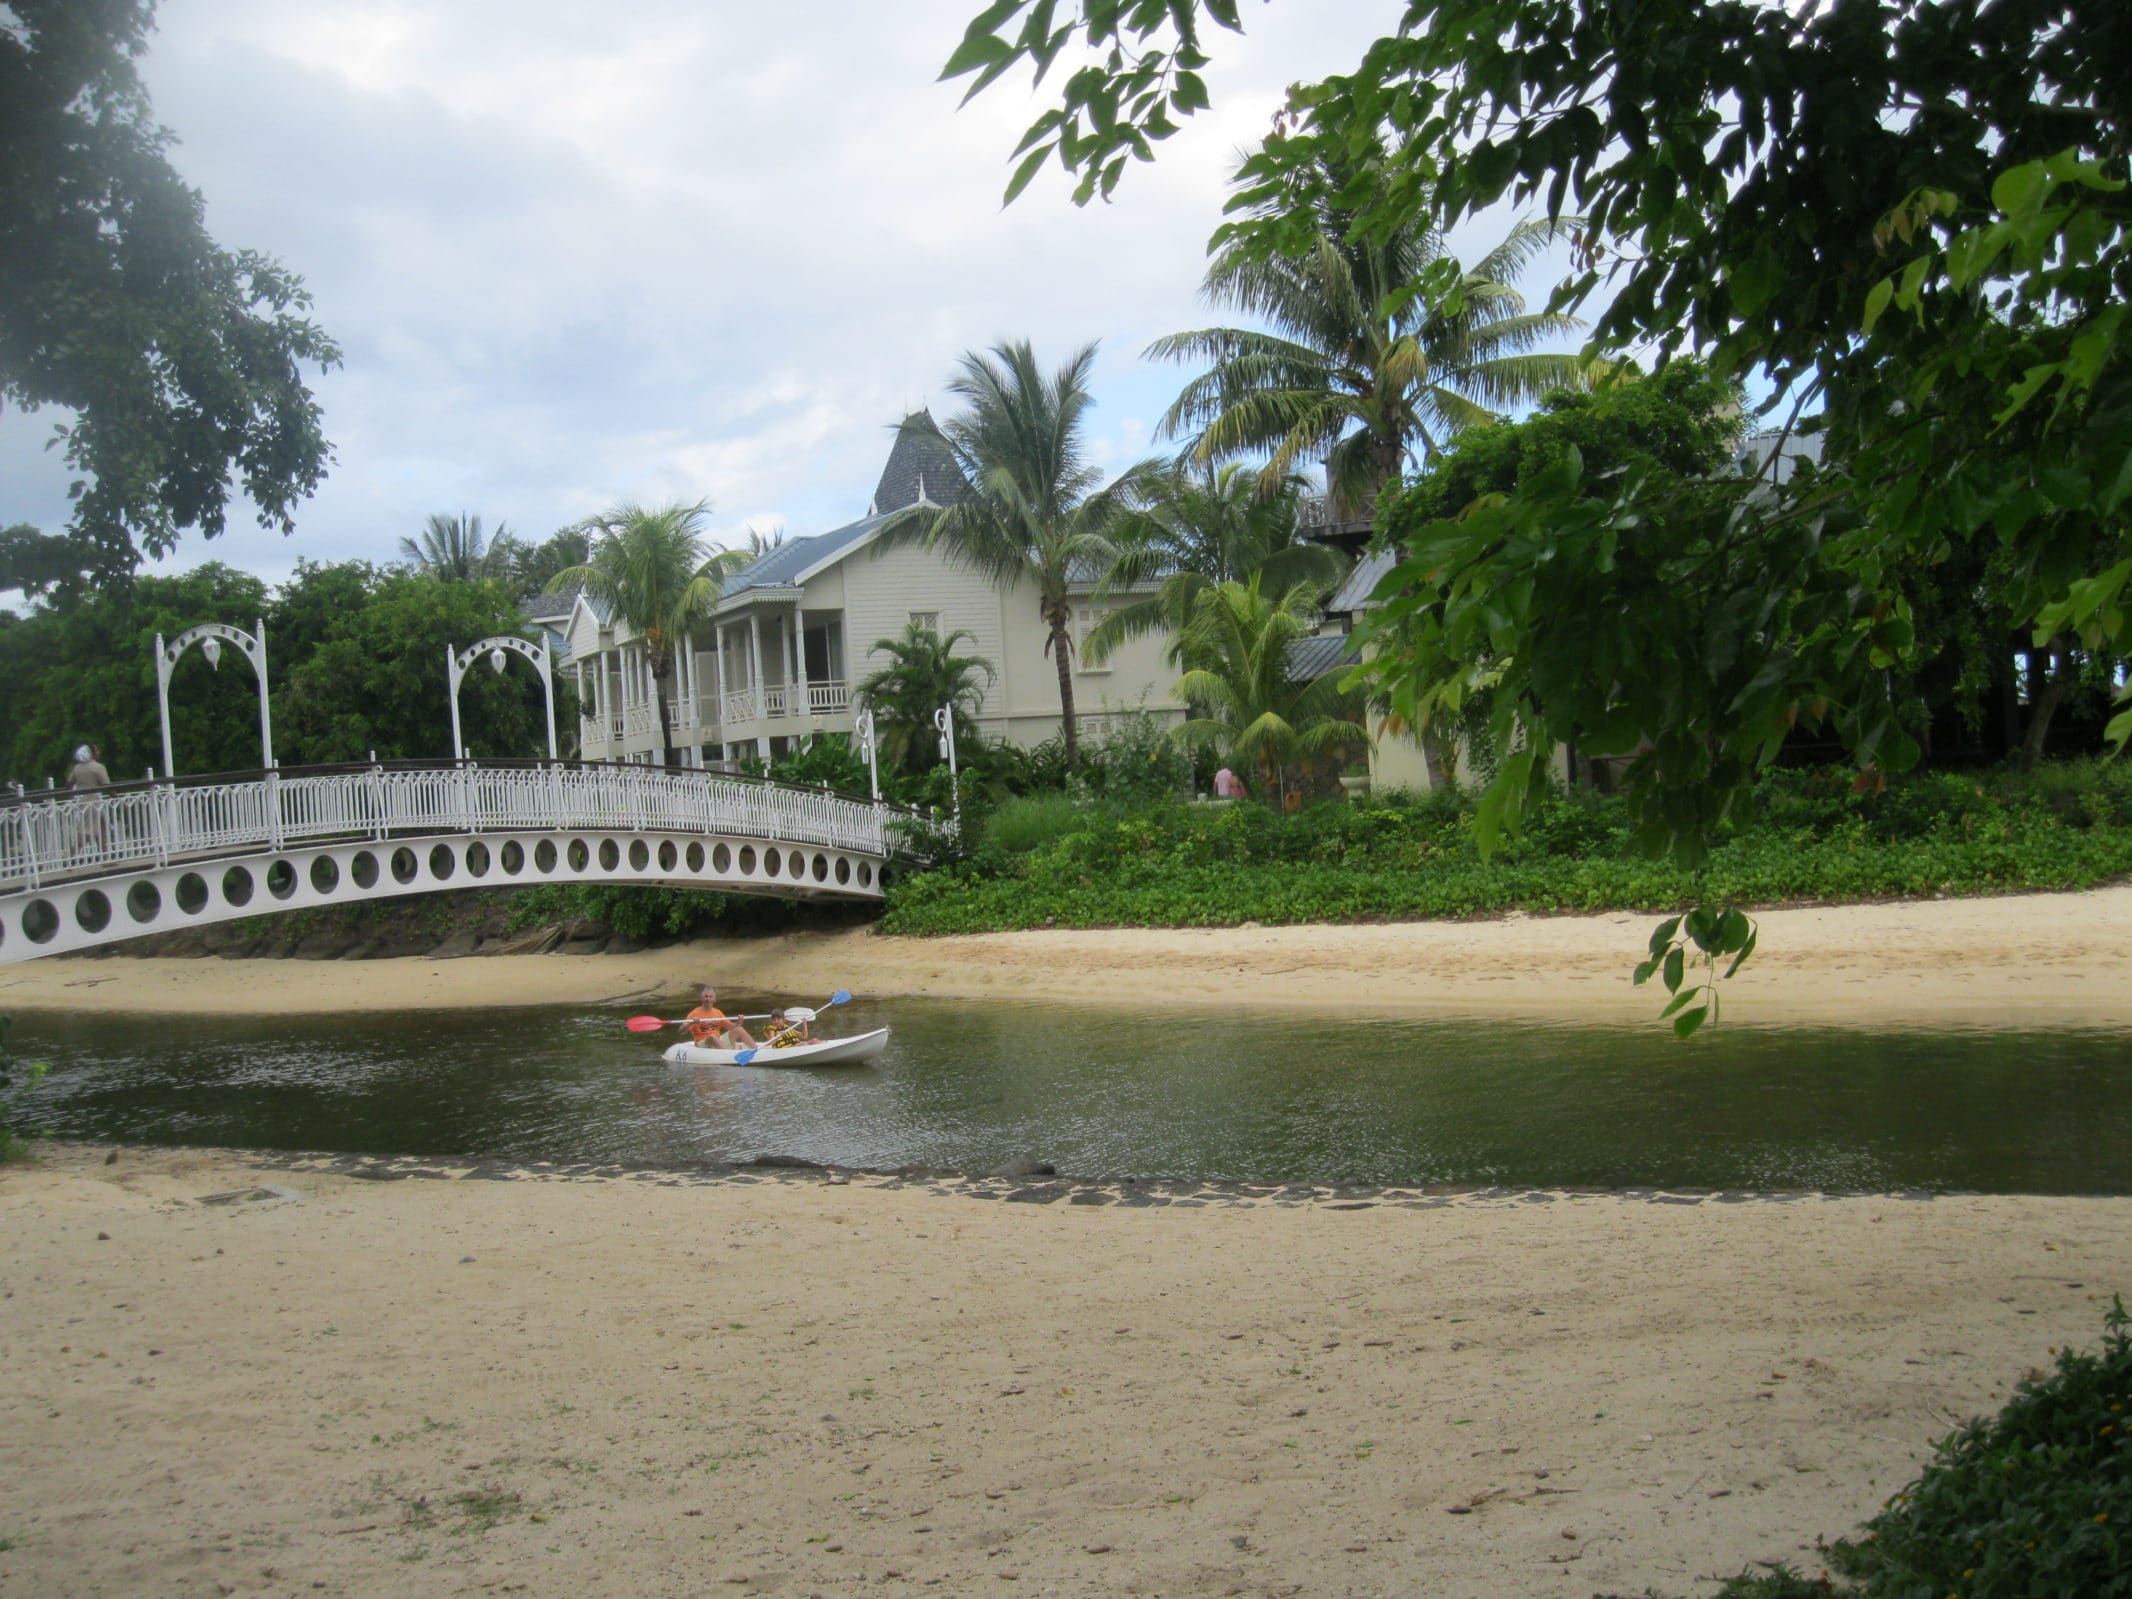 Kayaking around the Heritage Resorts